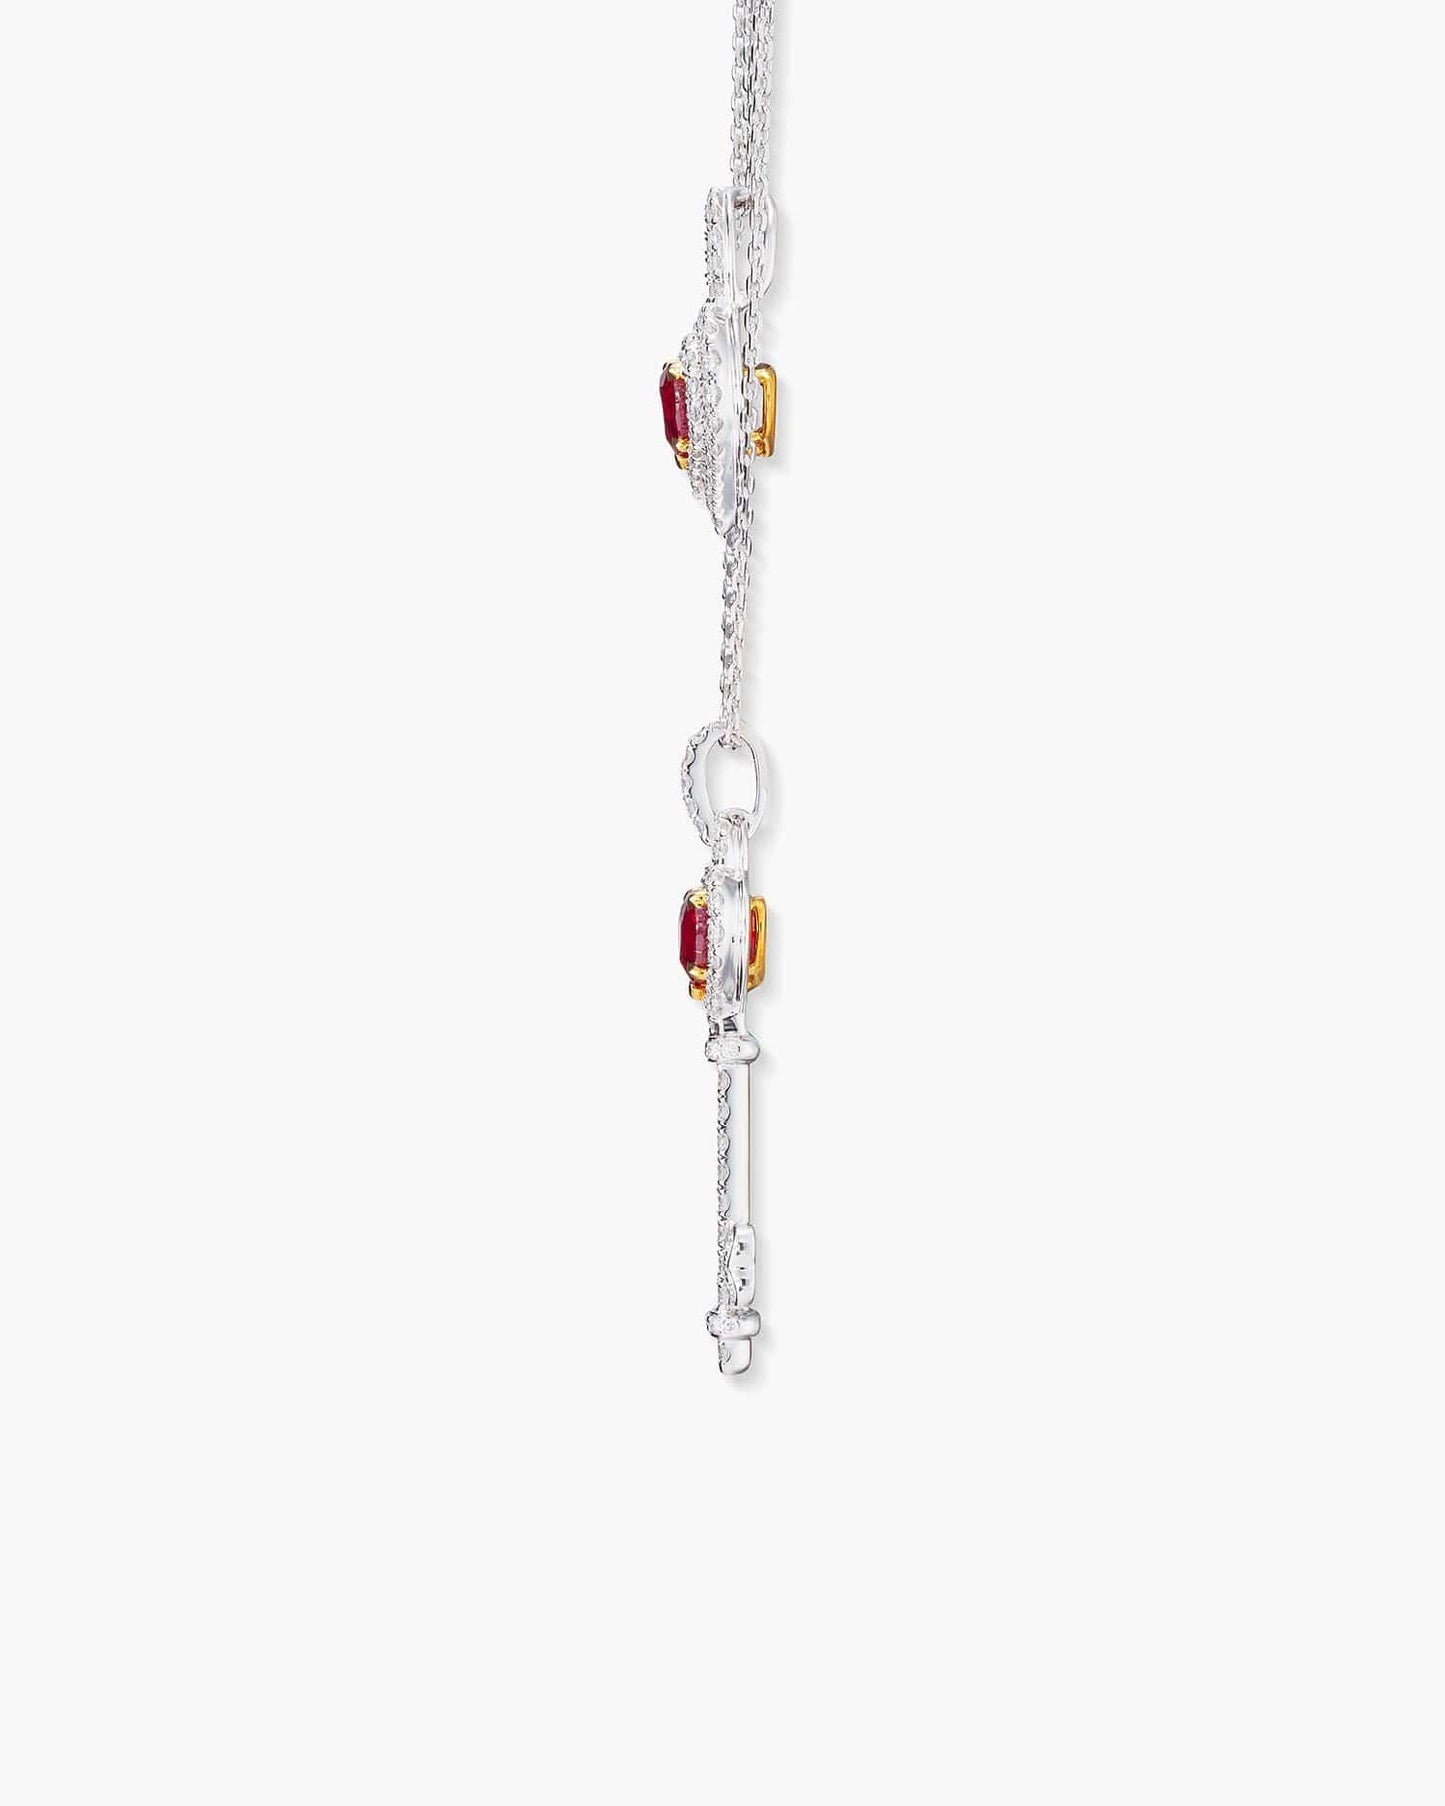 Heart Shape Burmese Ruby and Diamond Lock and Key Pendant Necklace Set, 2.96 carats